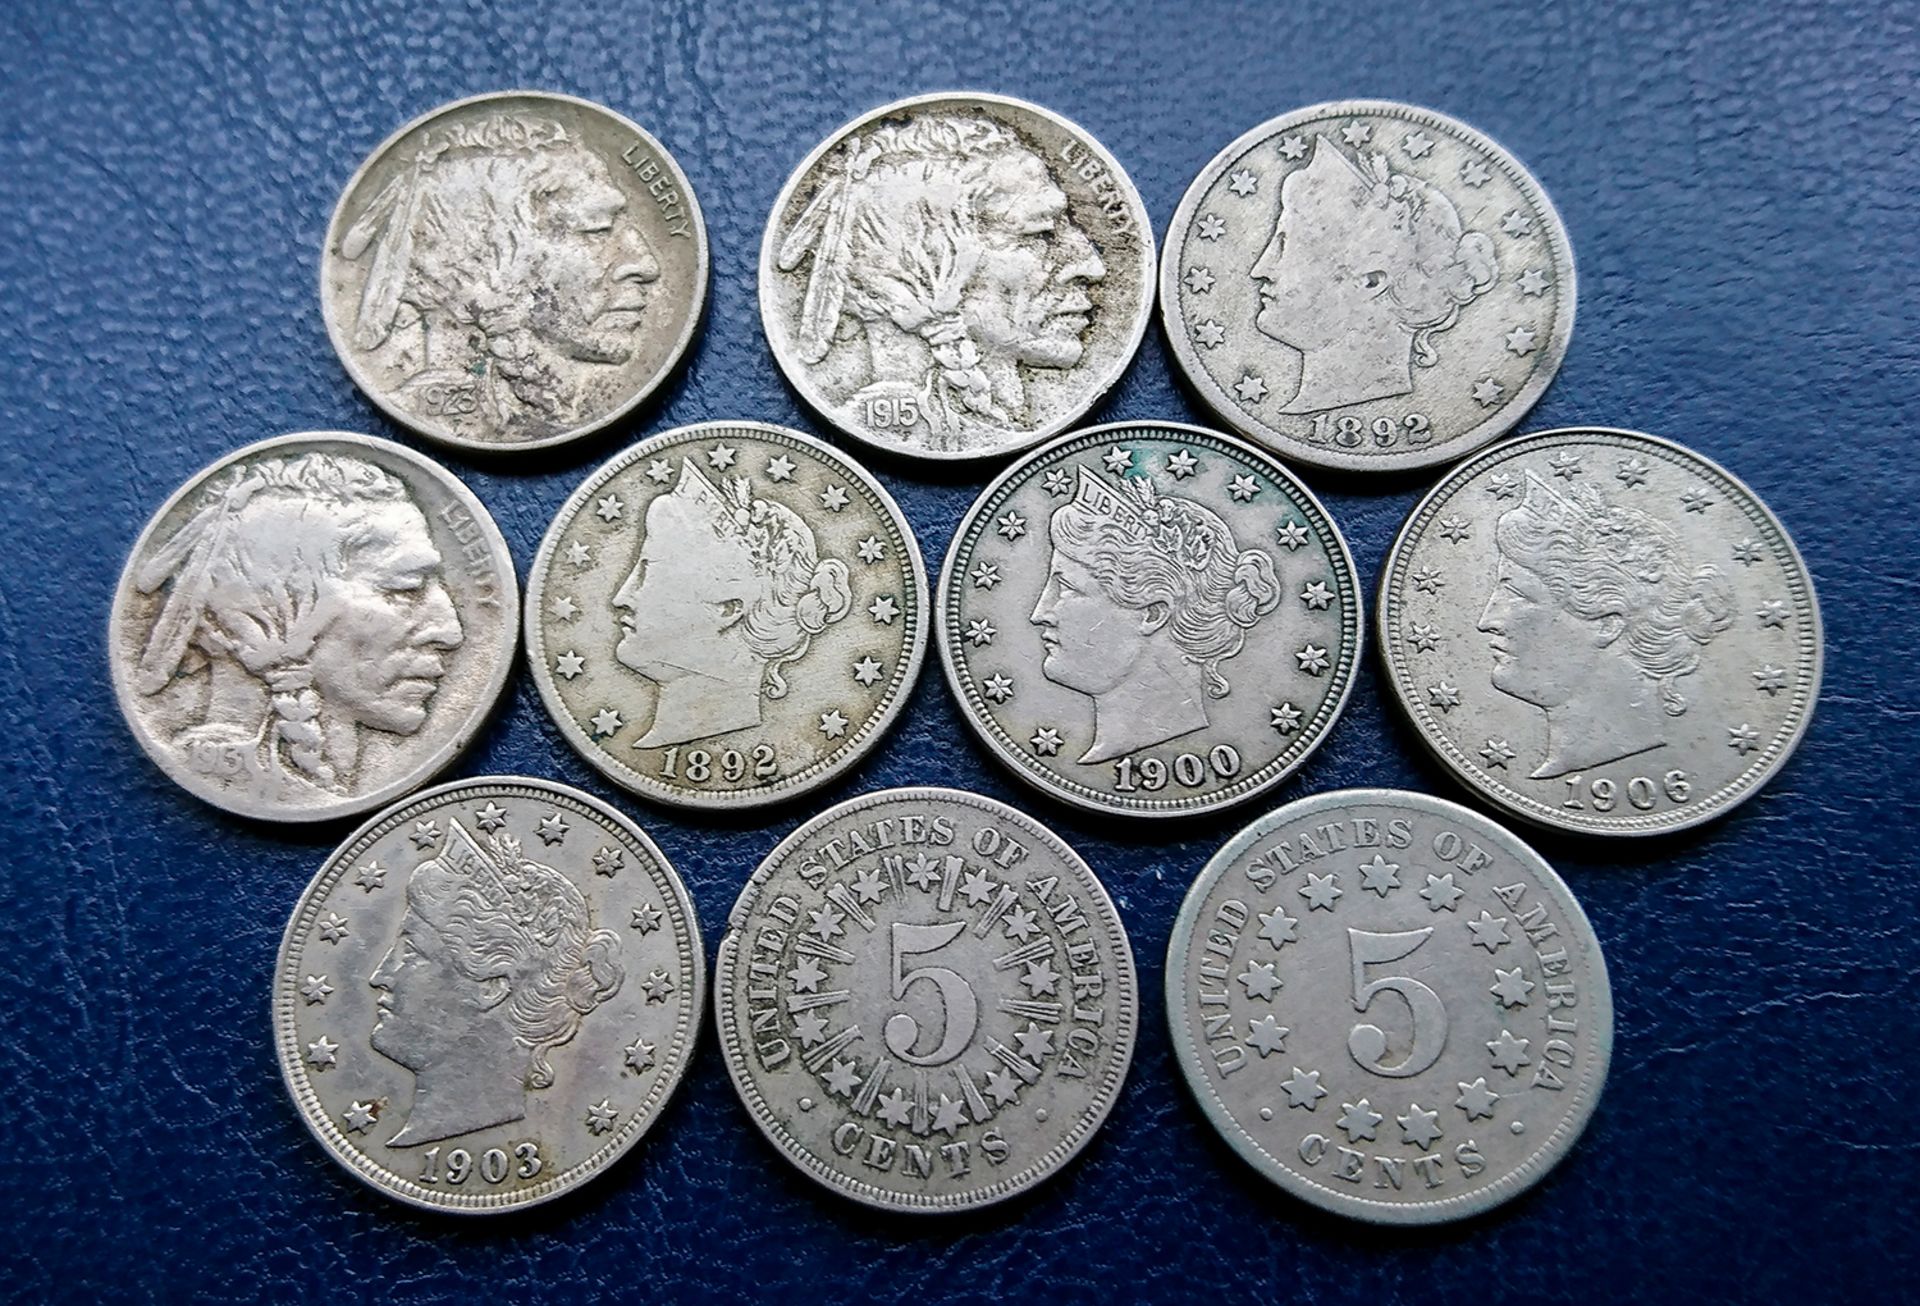 USA - Nickel 5 Cents (10) including 1867 Rays, Liberty, Buffalo 1913, etc. some good grades.